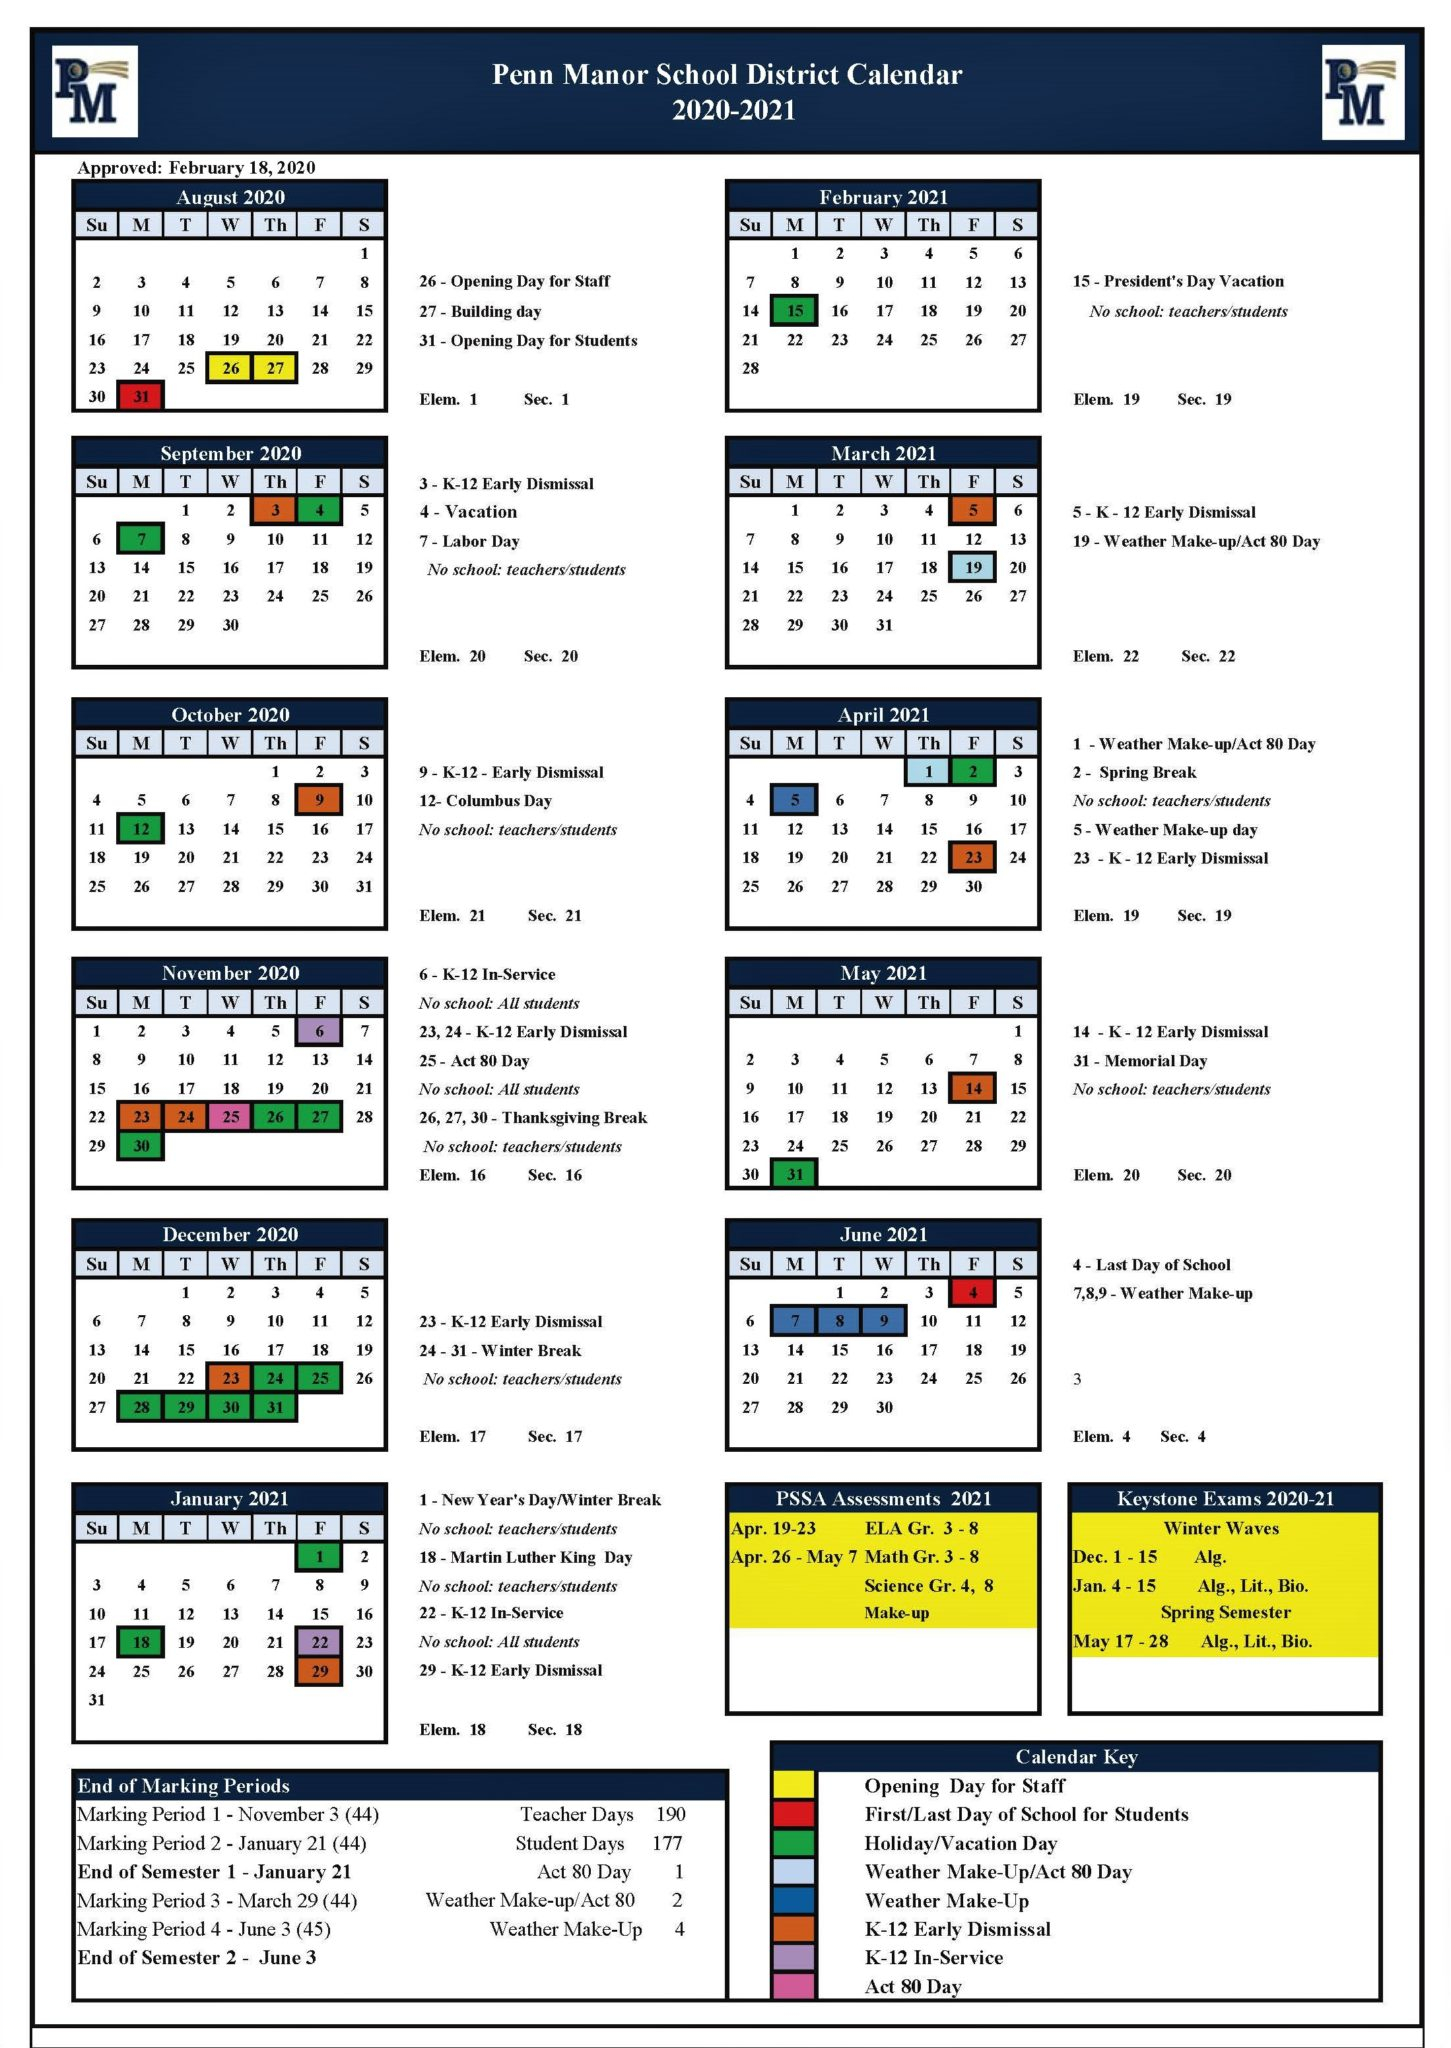 Penn 2023 Academic Calendar Printable Calendar 2023